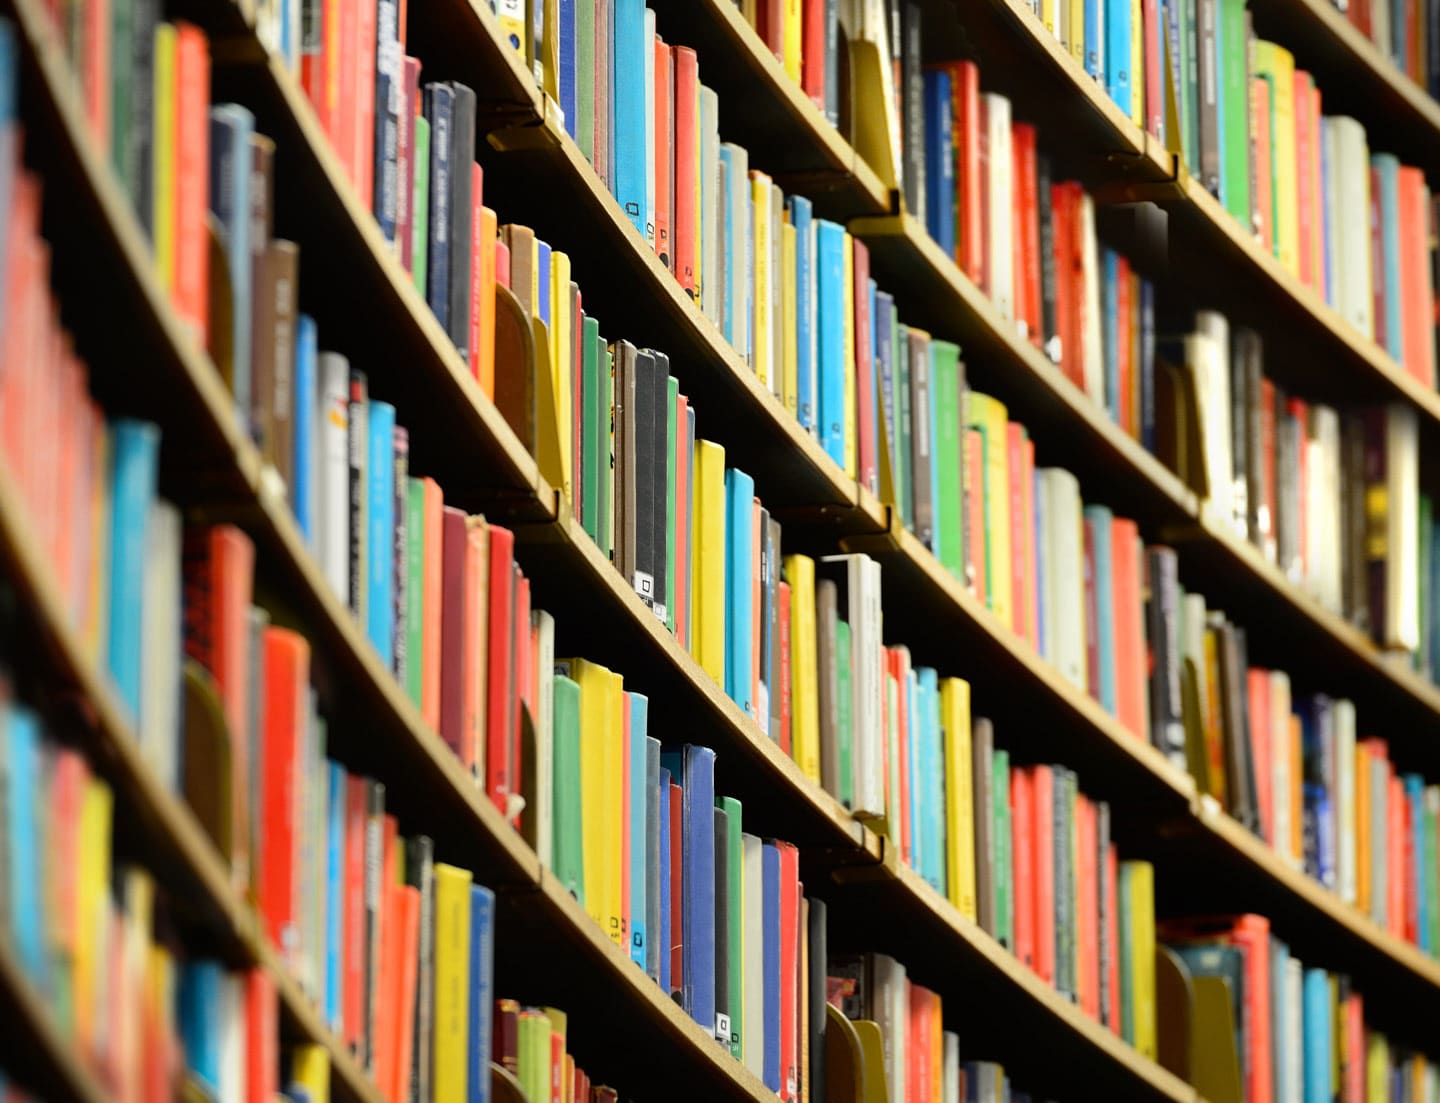 Bookshelves at an independent bookstore